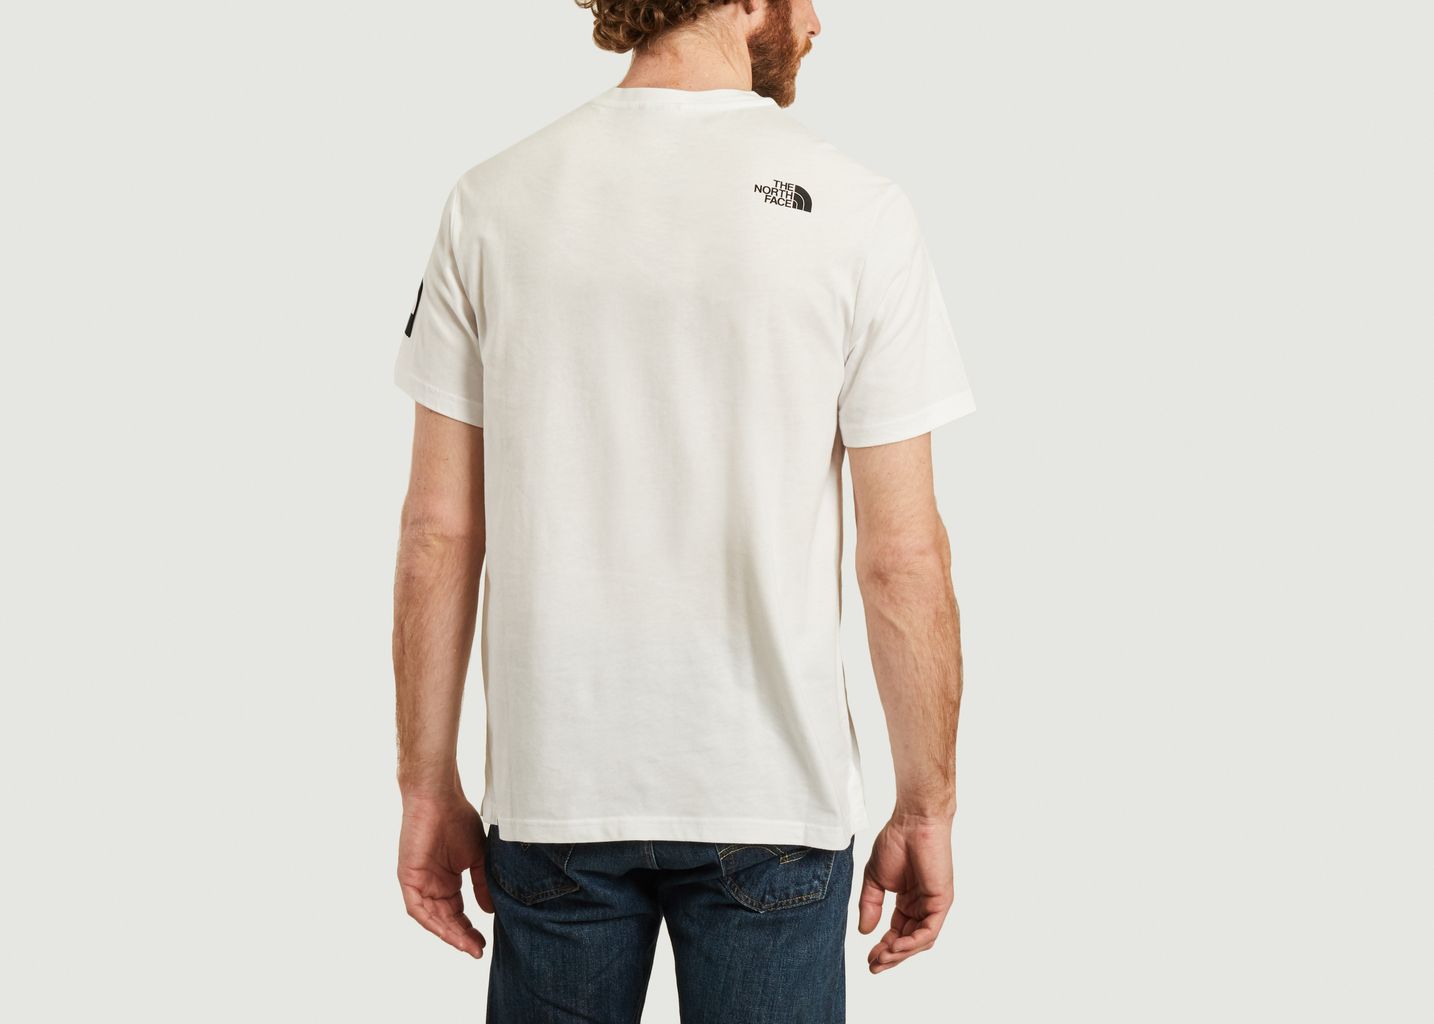 Fine Alpine 2 T-Shirt - The North Face